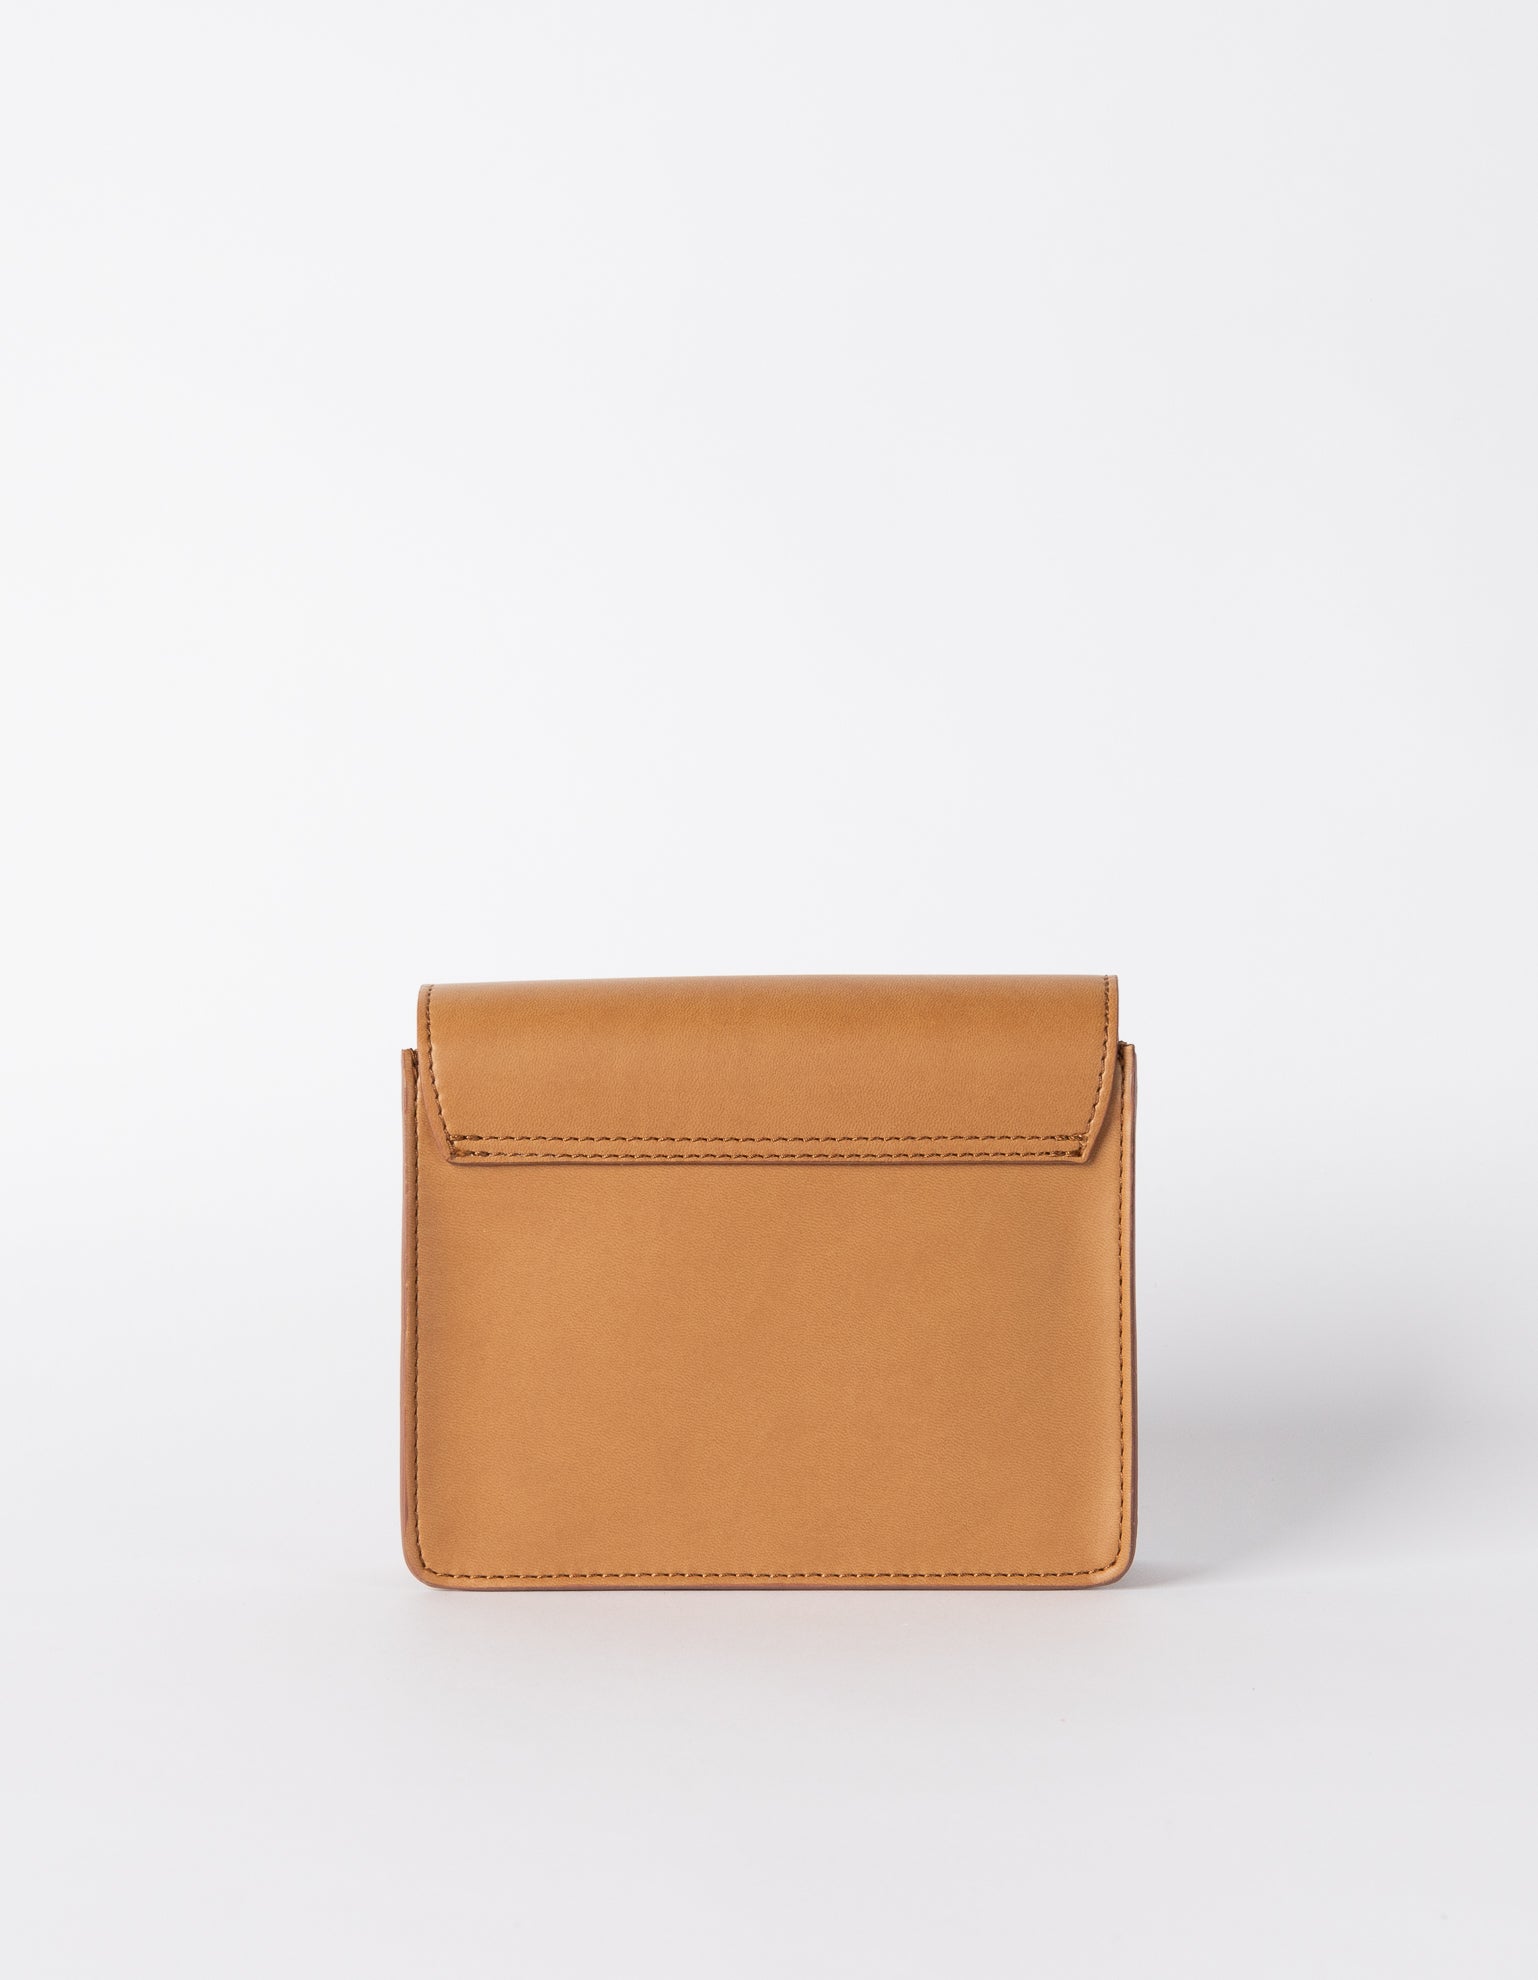 Audrey Mini Apple Vegan Leather Cognac Rectangle Ladies Handbag, Back product image.